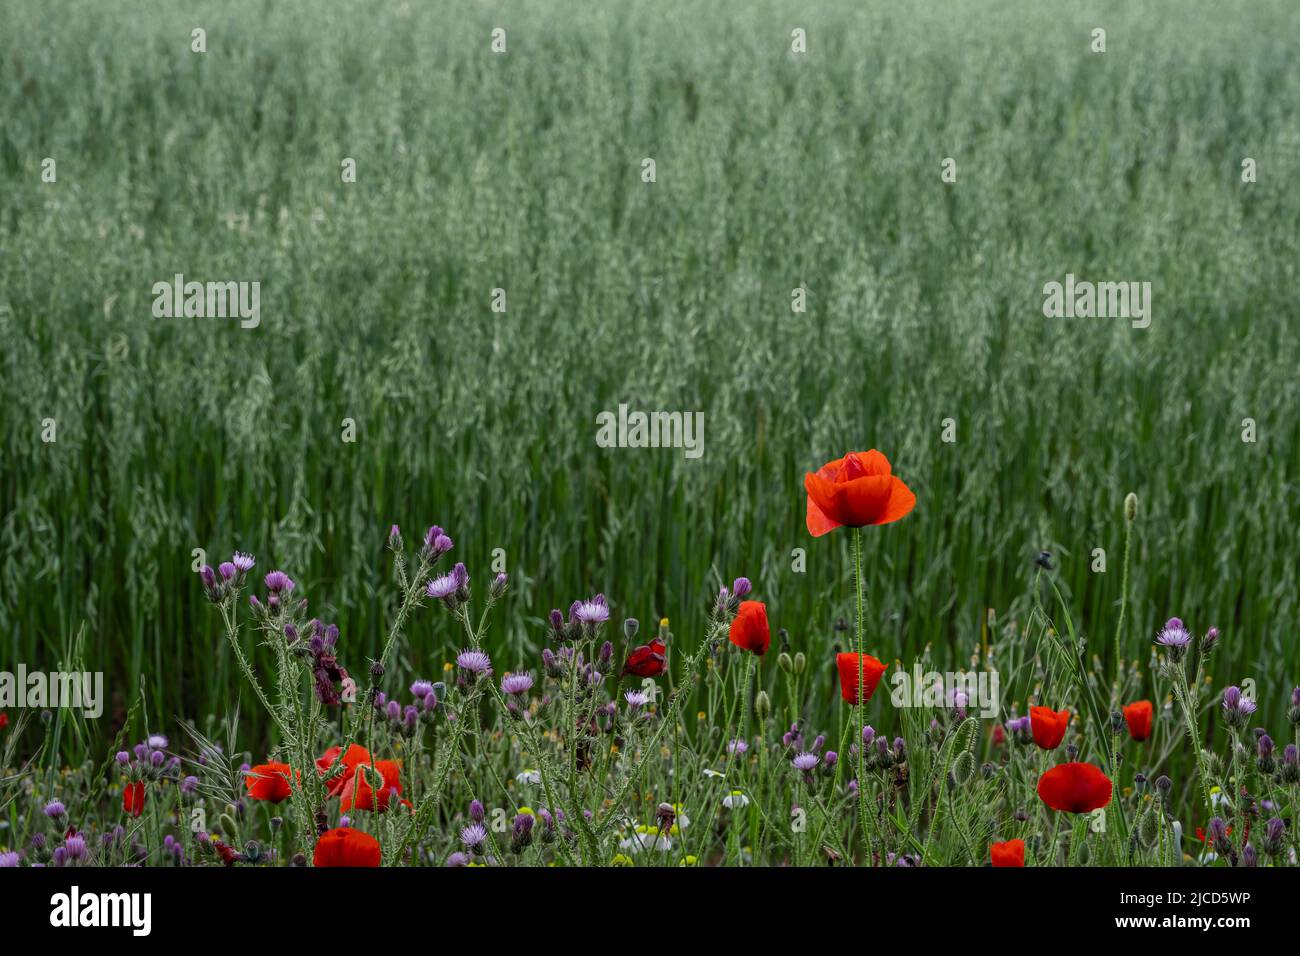 Papavero rosso (Papaver rhoeas) e carduus pycnocephalus (carduus pycephalus) fiori selvatici che sbocciano nei campi primaverili Foto Stock